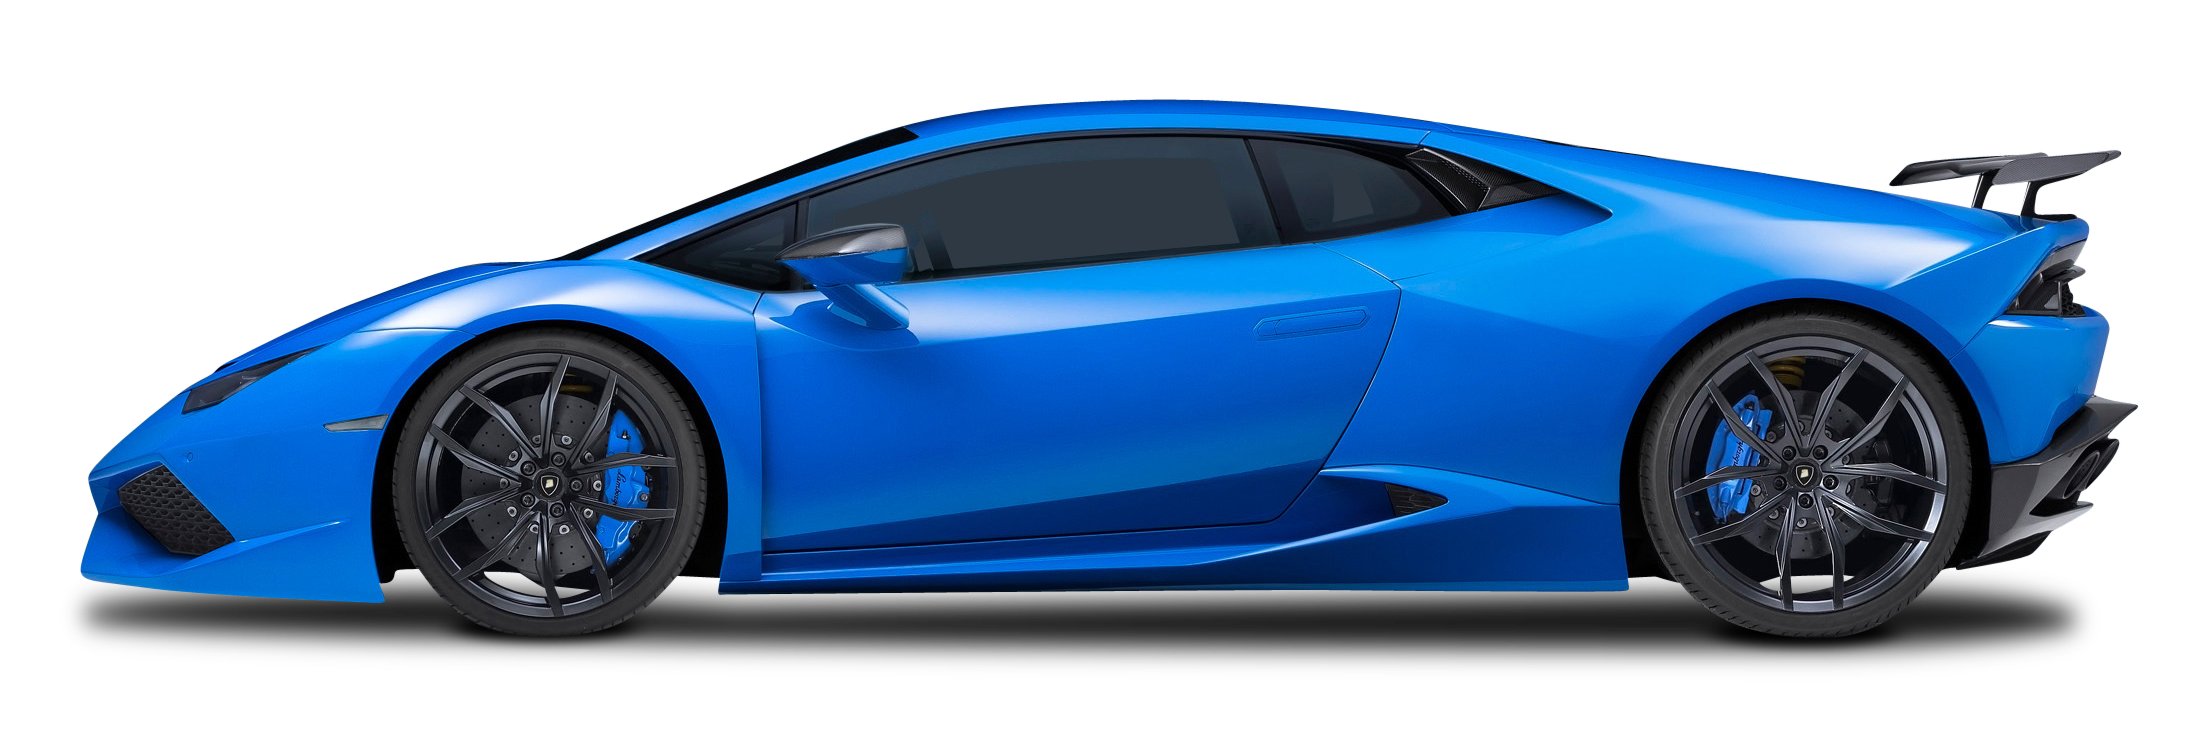 Lamborghini Veneno PNG HD Isolated